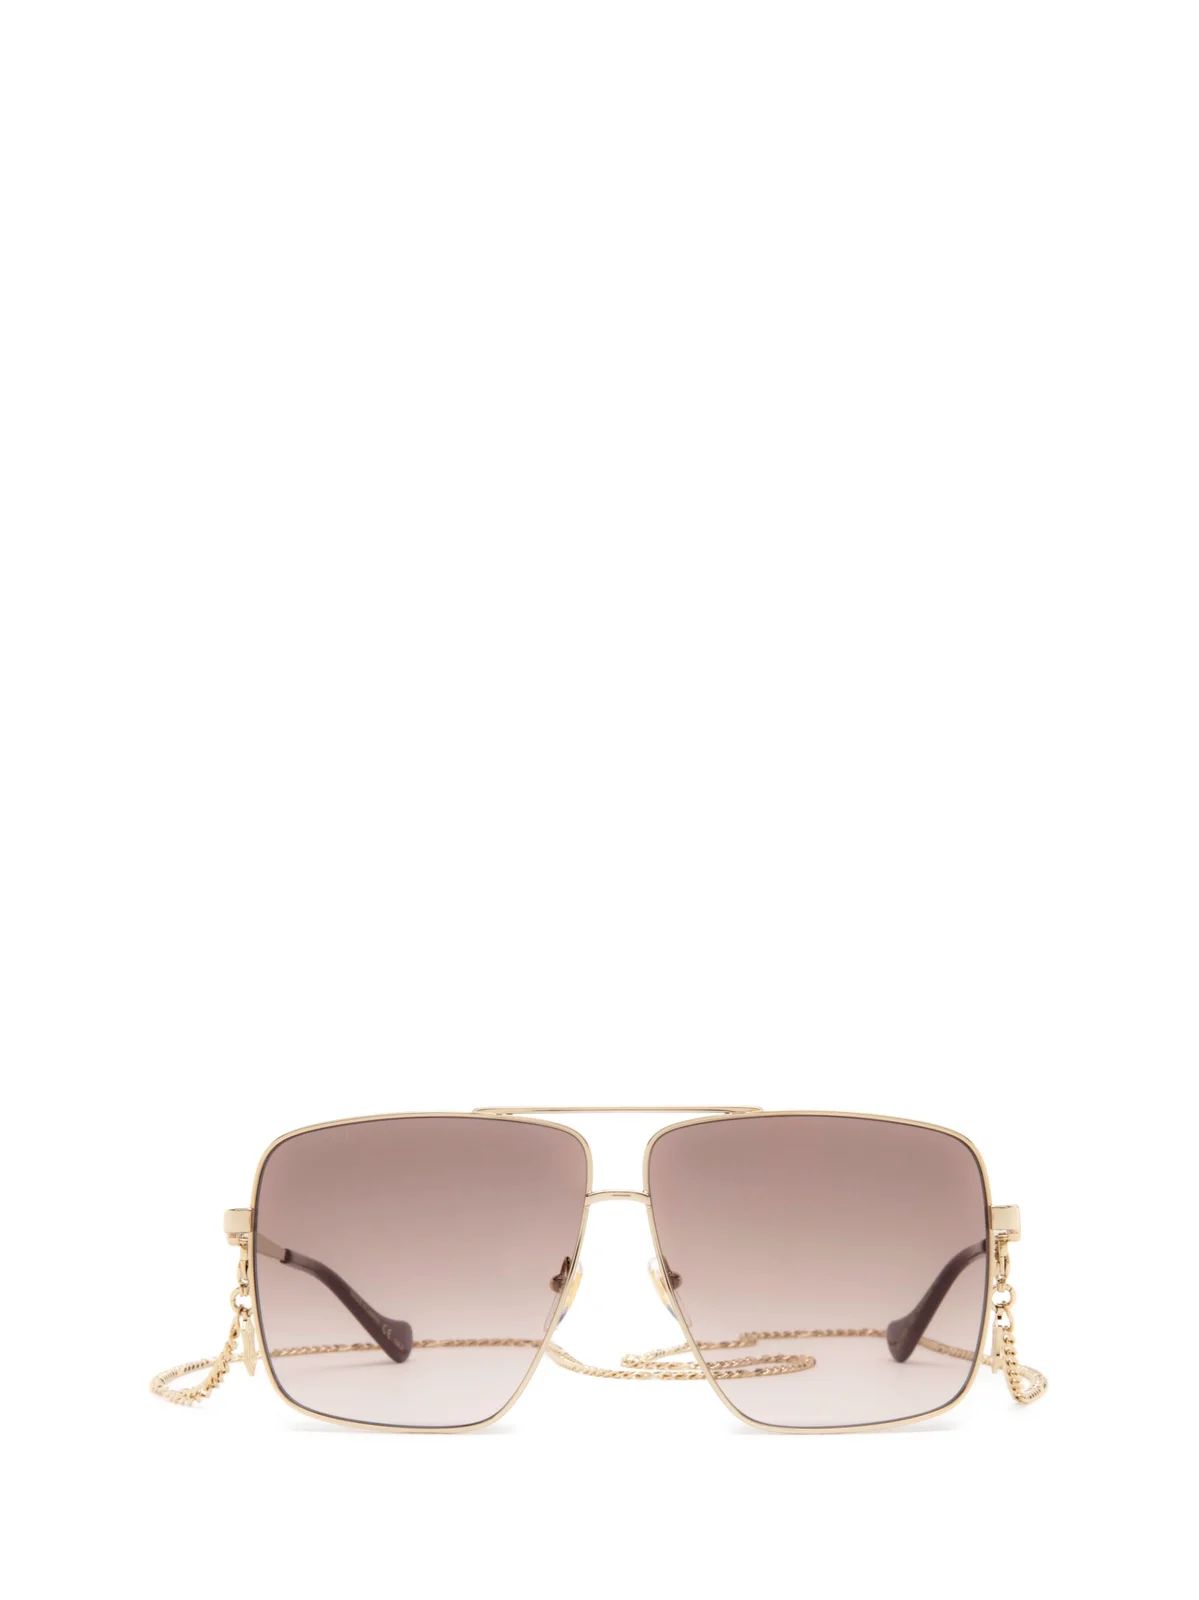 Gucci Eyewear Oversized Square Frame Sunglasses | Cettire Global